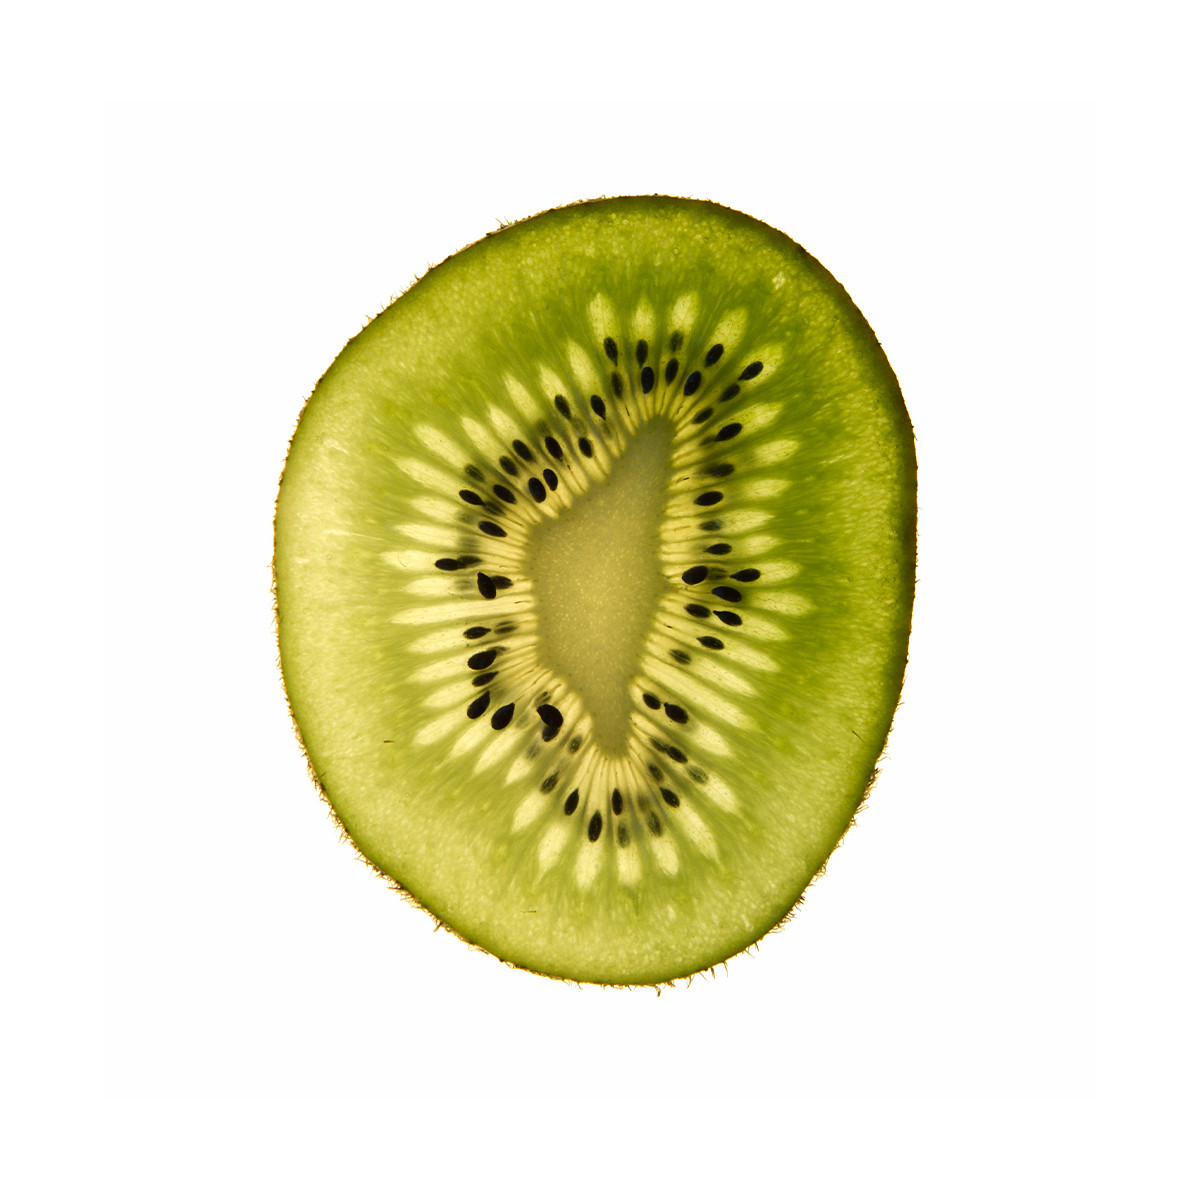 Fragrance kiwi